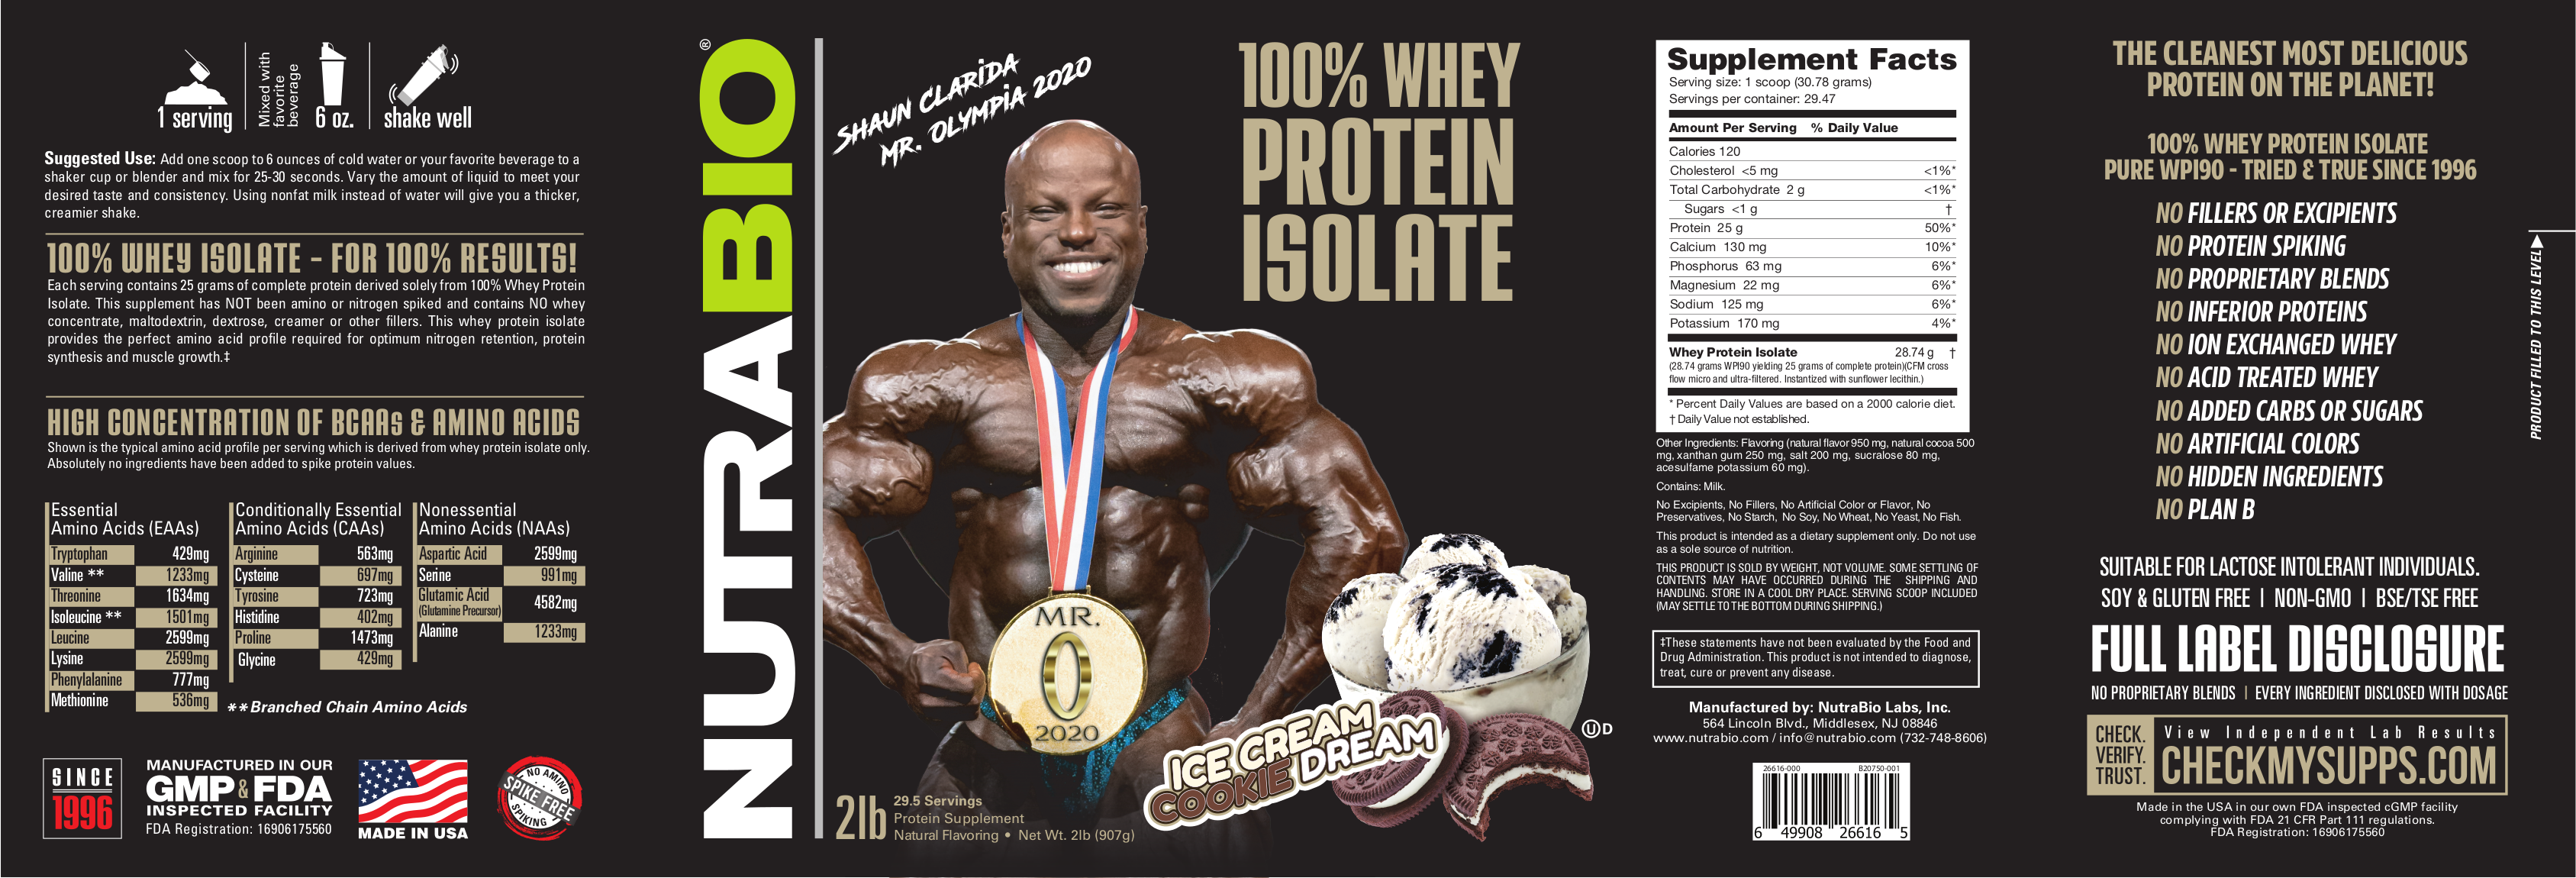 NutraBio 100% Whey Protein Isolate Ice Cream Cookie Dream Shaun Clarida Label